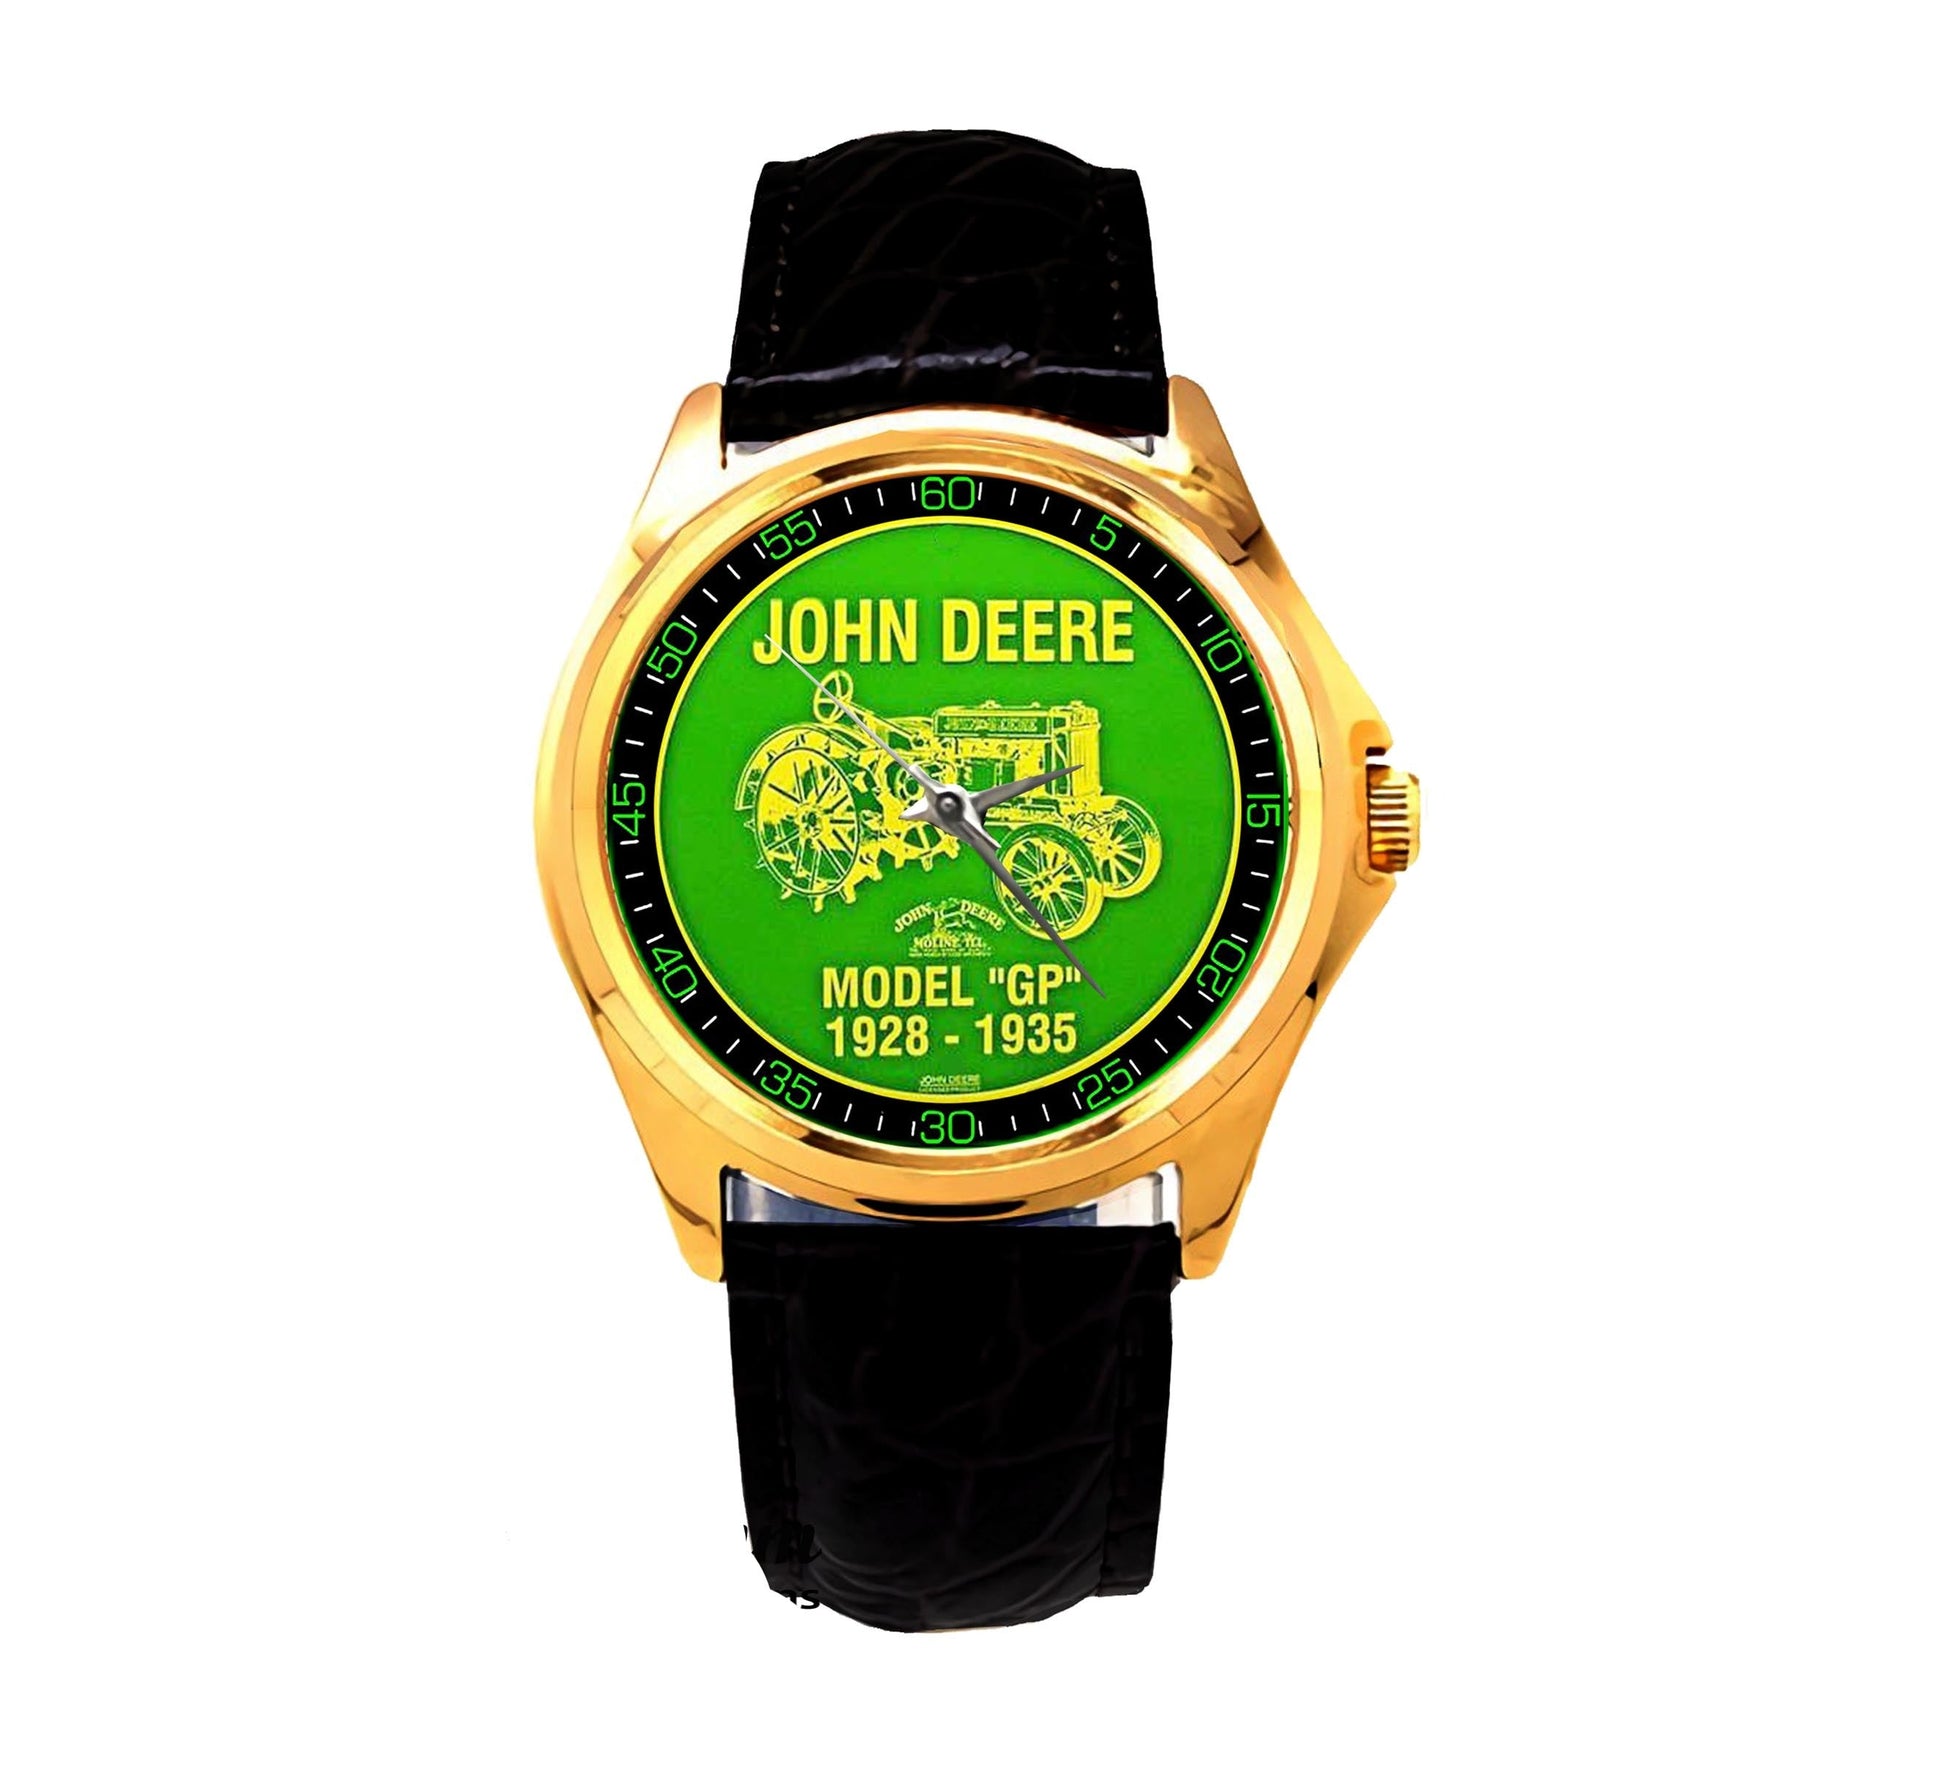 John Deere Watches bdk15